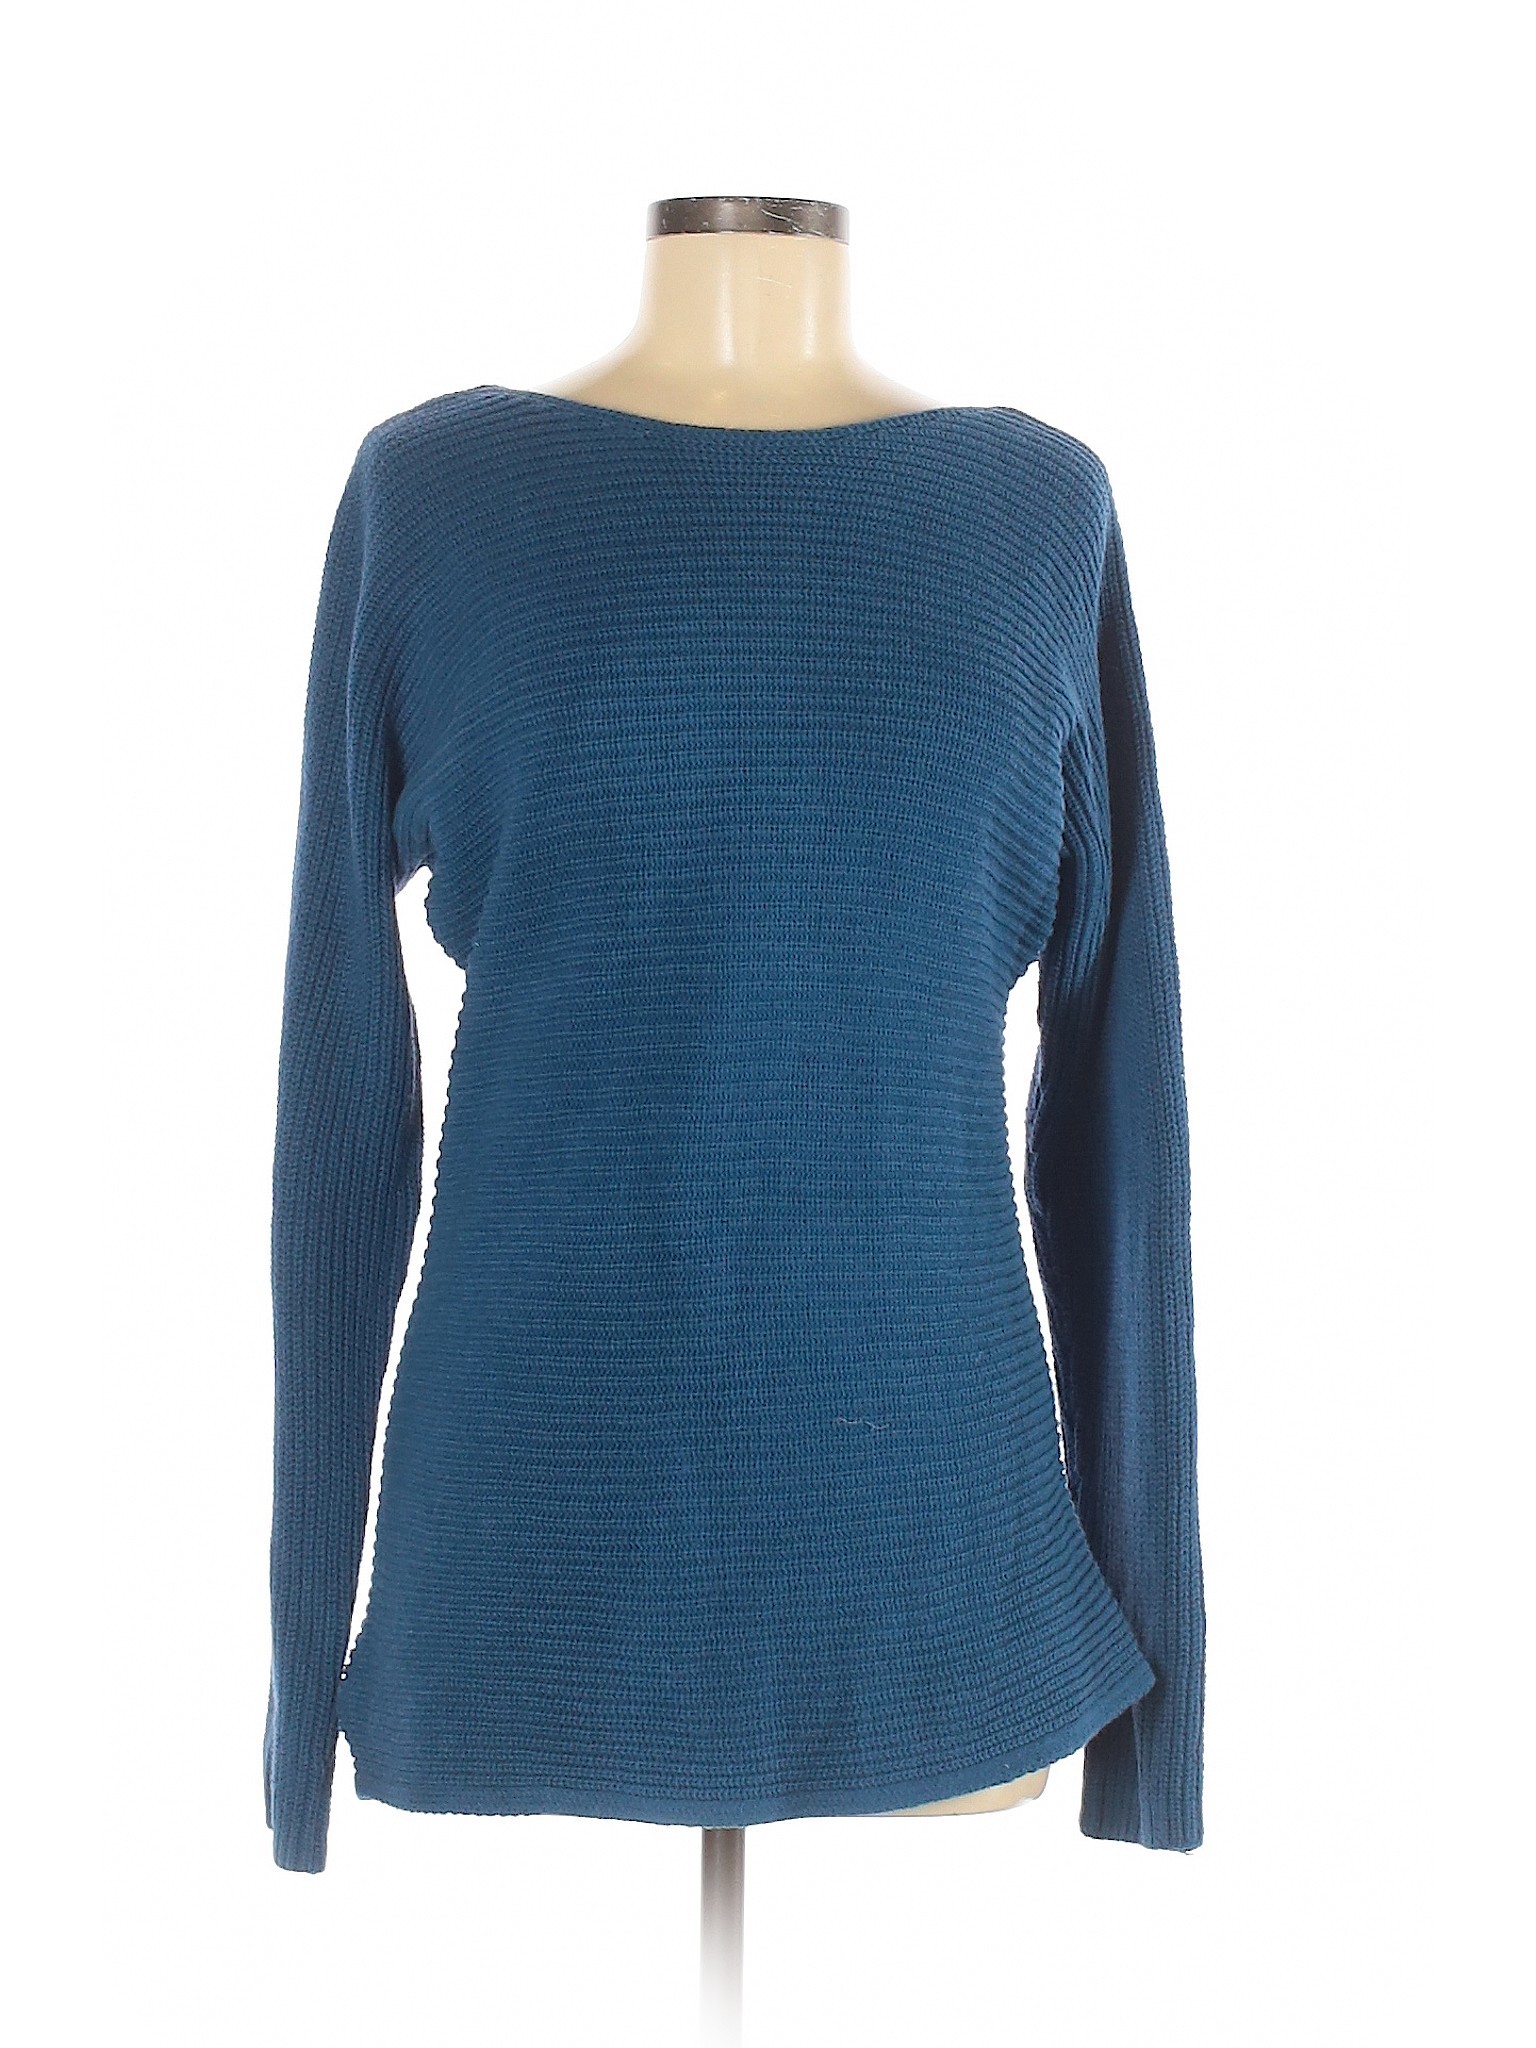 Old Navy Women Green Pullover Sweater M | eBay